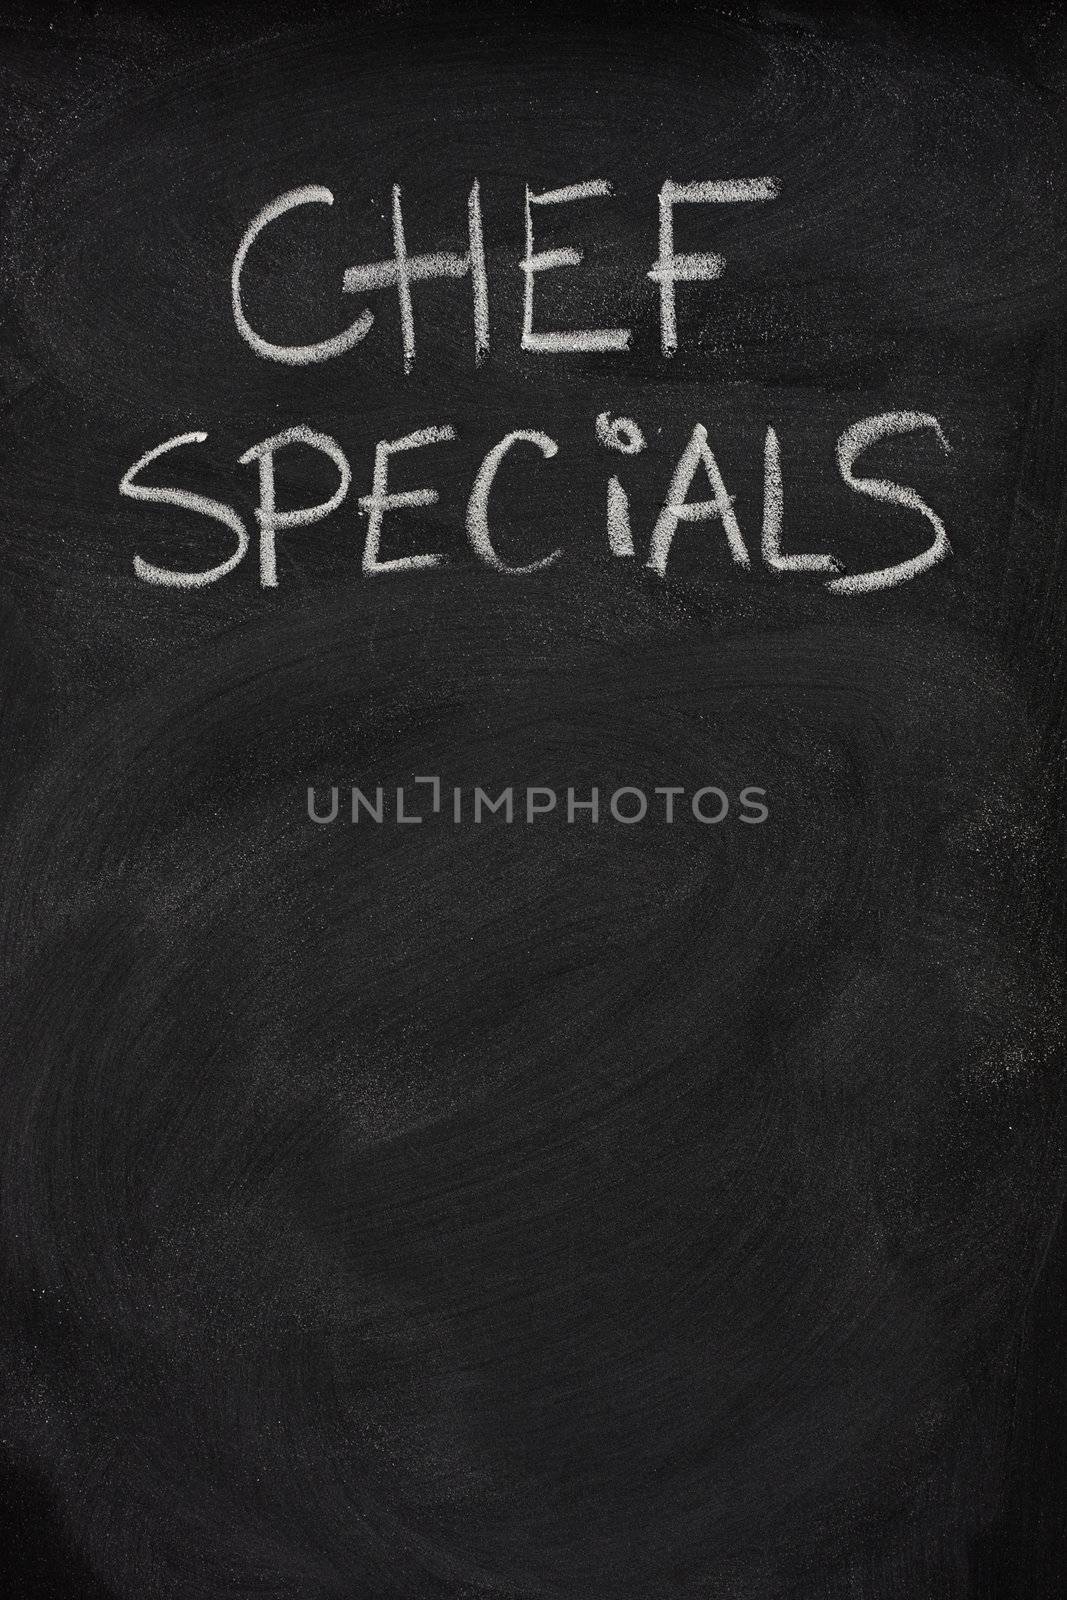 chef specials title handwritten with white chalk on blackboard, copy space below